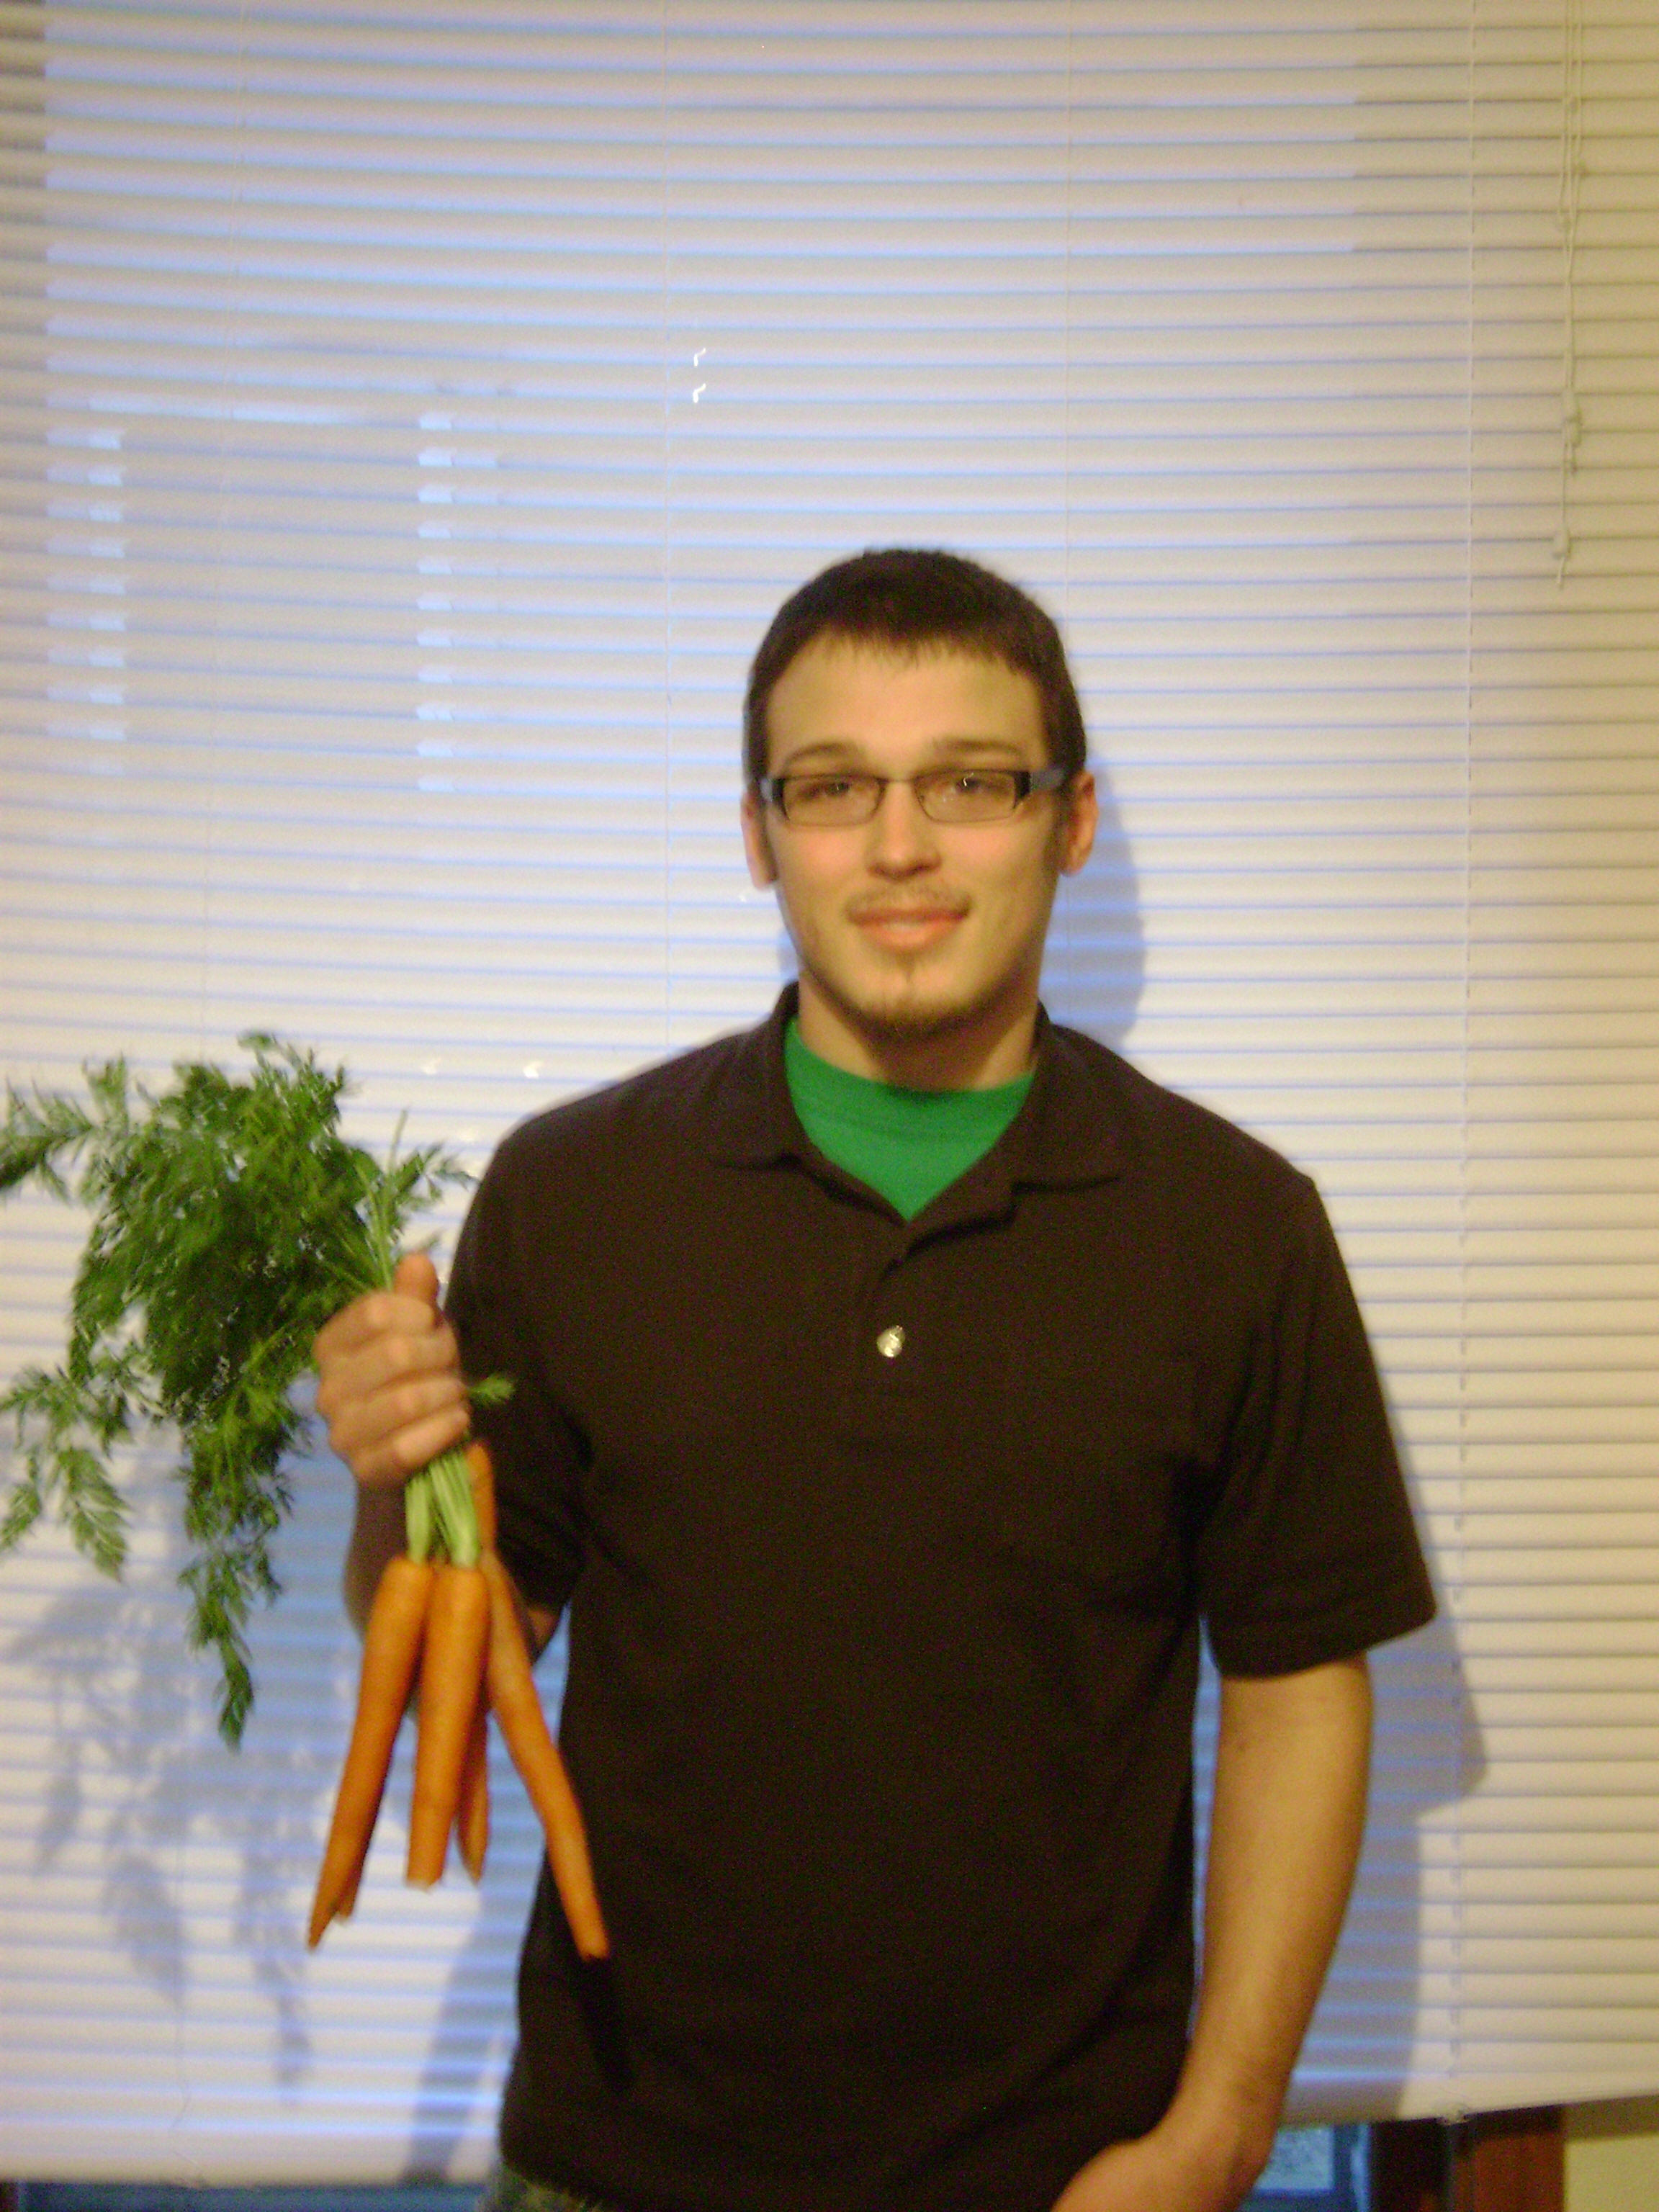 Peter Hordyk holding carrots taken by Ryan Cashman